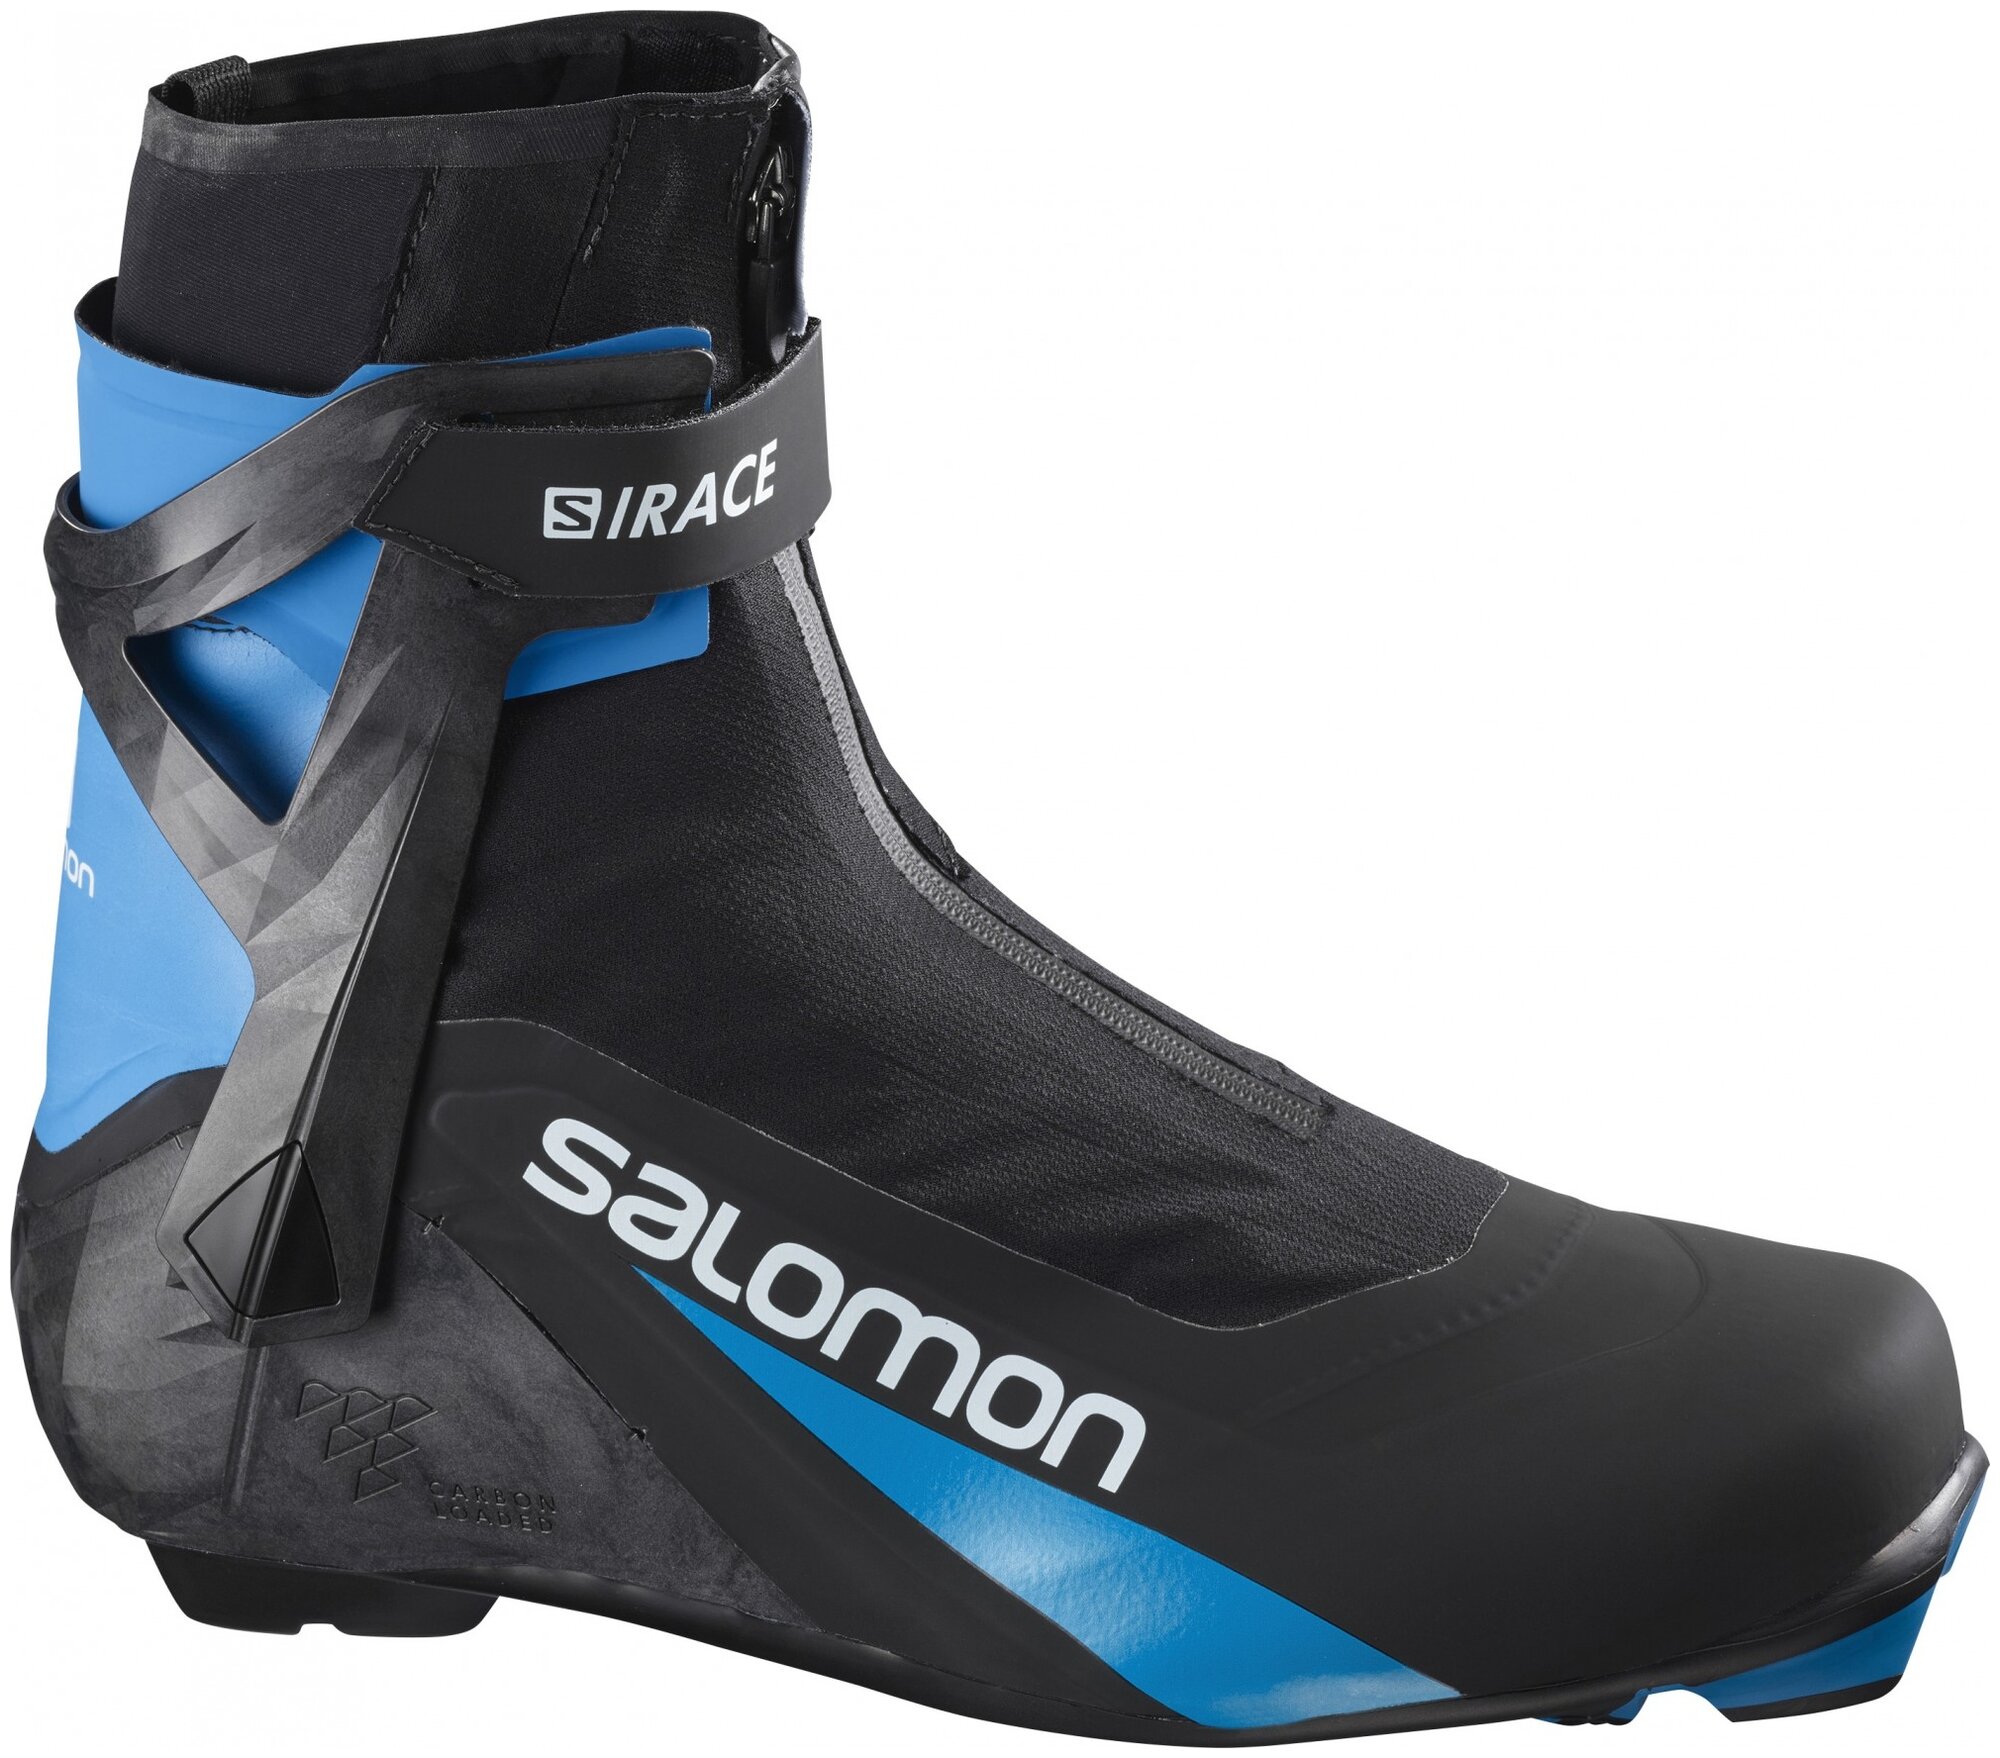   SALOMON S/Race Carbon Skate Prolink Black/Blue (UK:9)